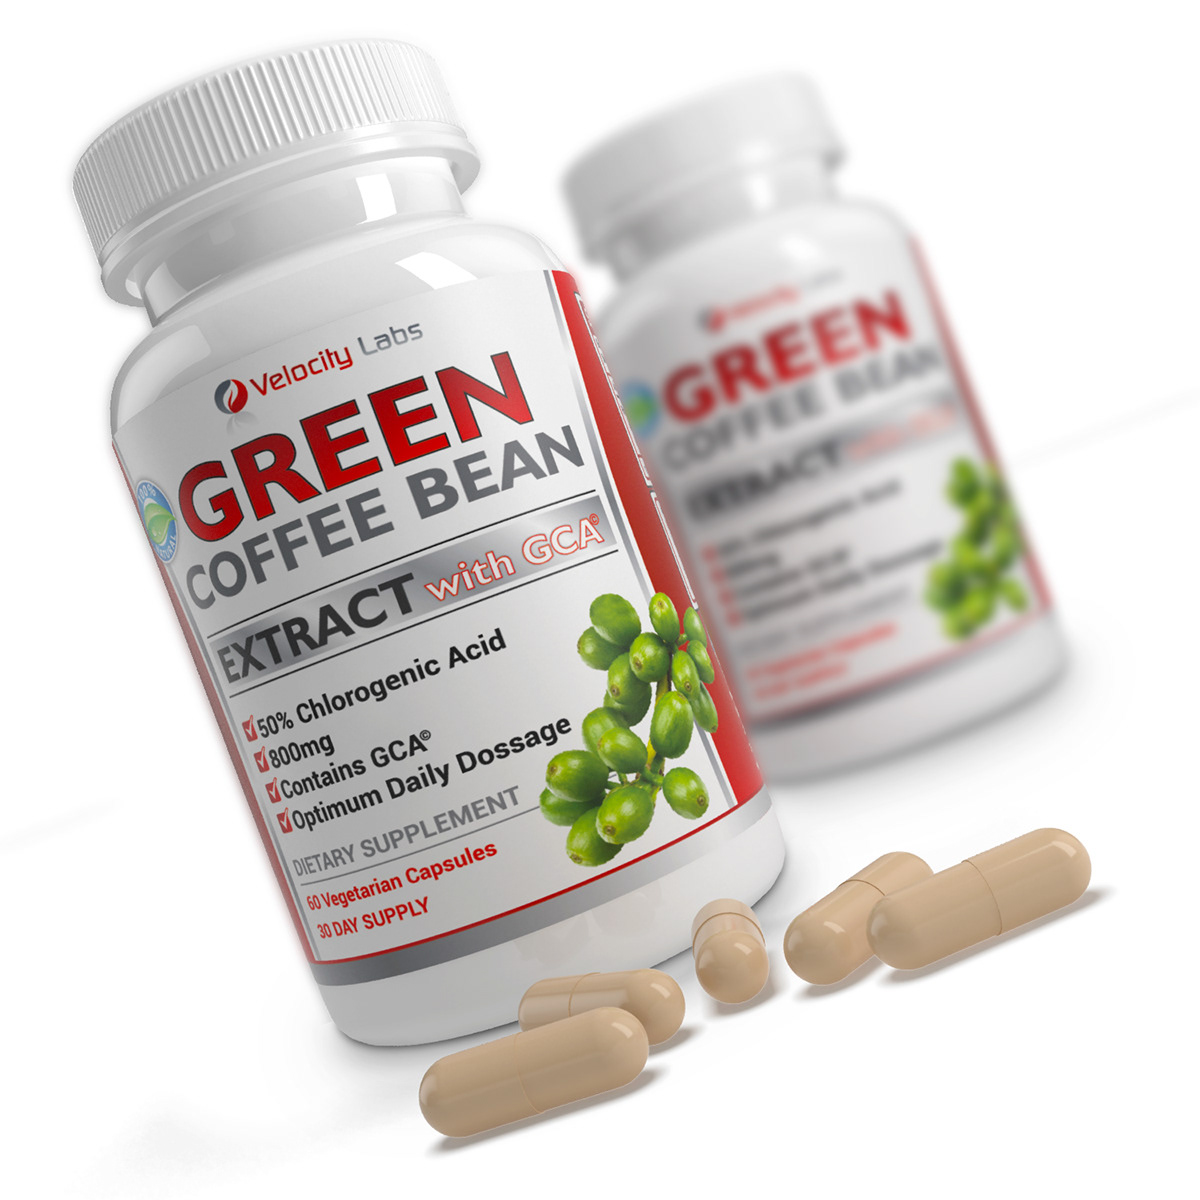 supplement bottle vitamins medicine workout Health pills gym Food  free